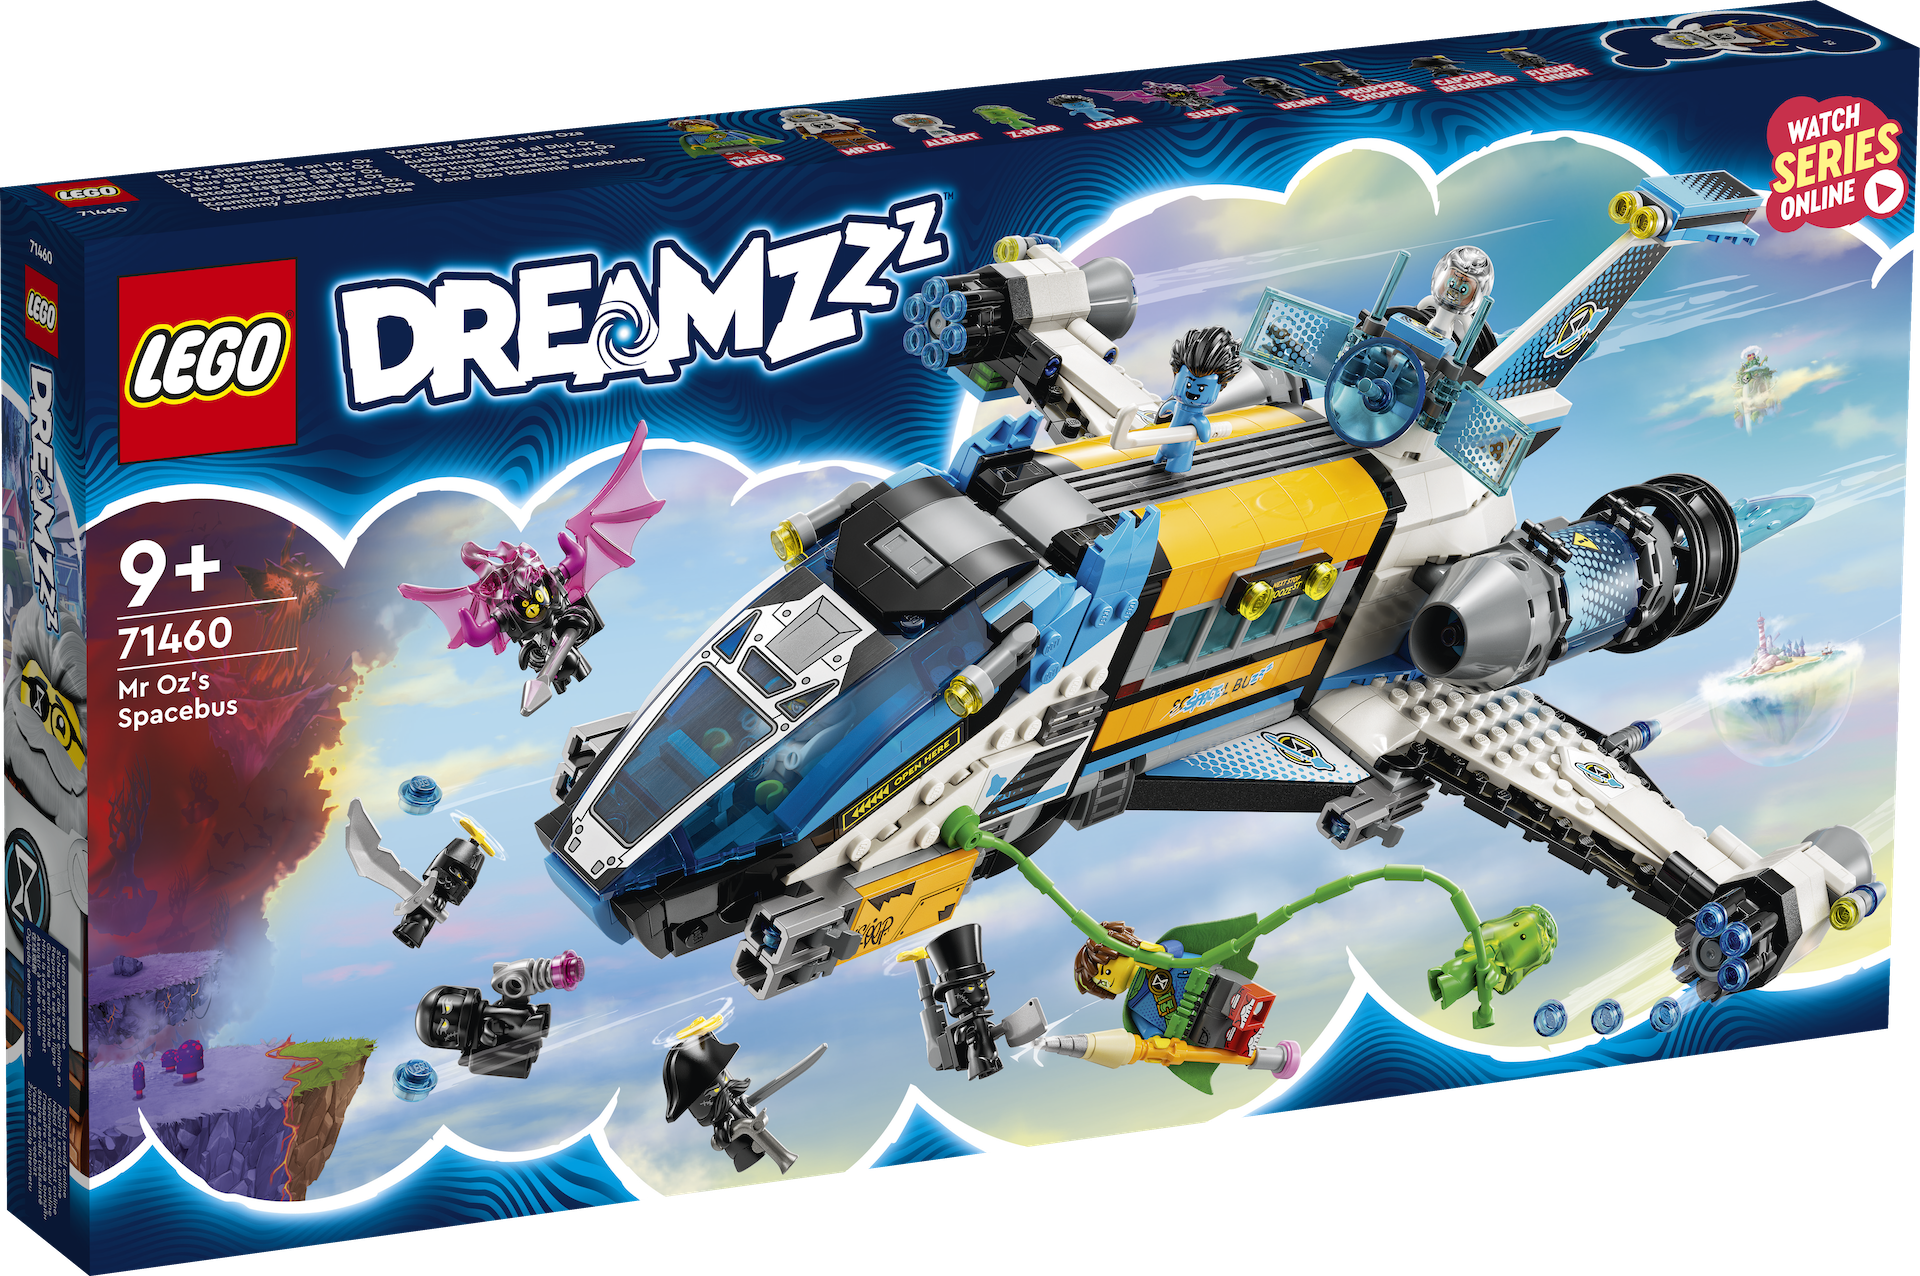 LEGO DreamZzz Wave One Sets Revealed! 